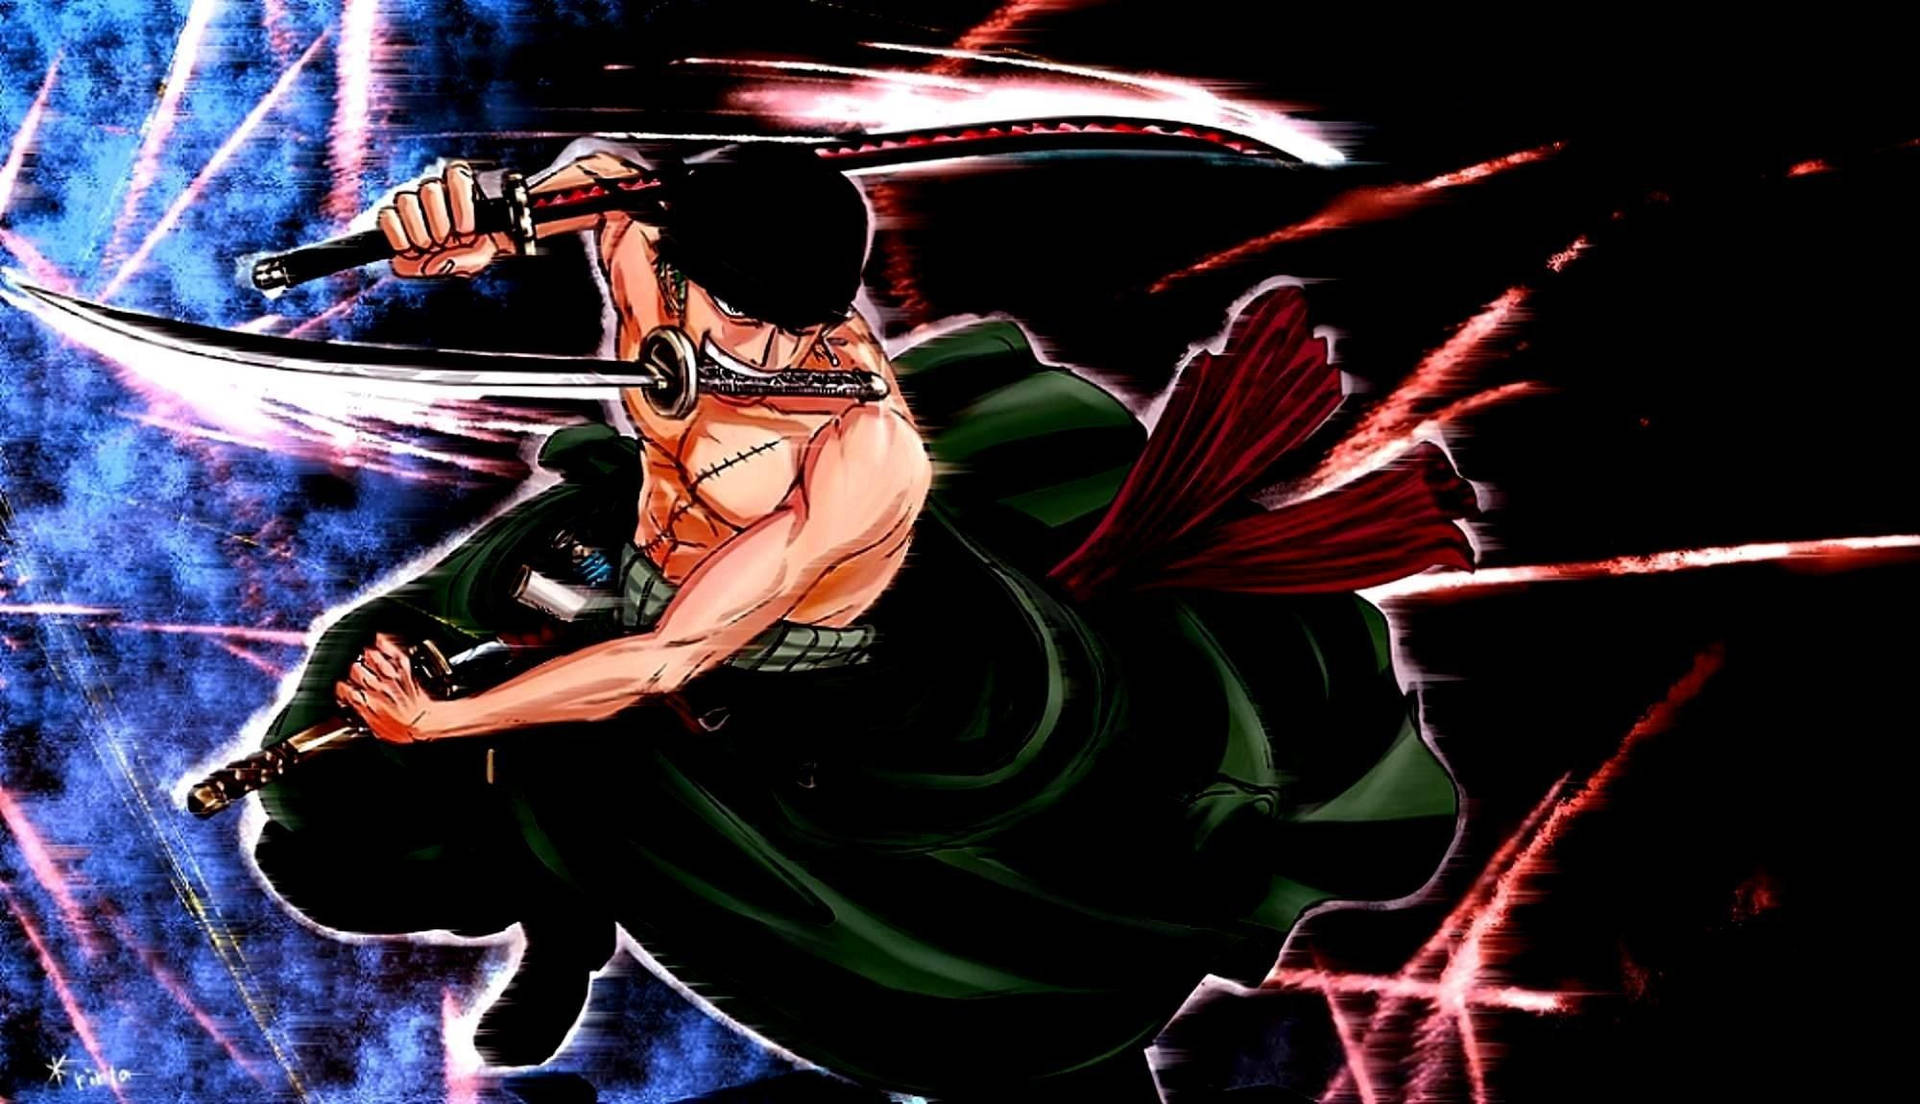 The Iconic Roronoa Zoro Leaps Into Action With His Blazing Swords. Background